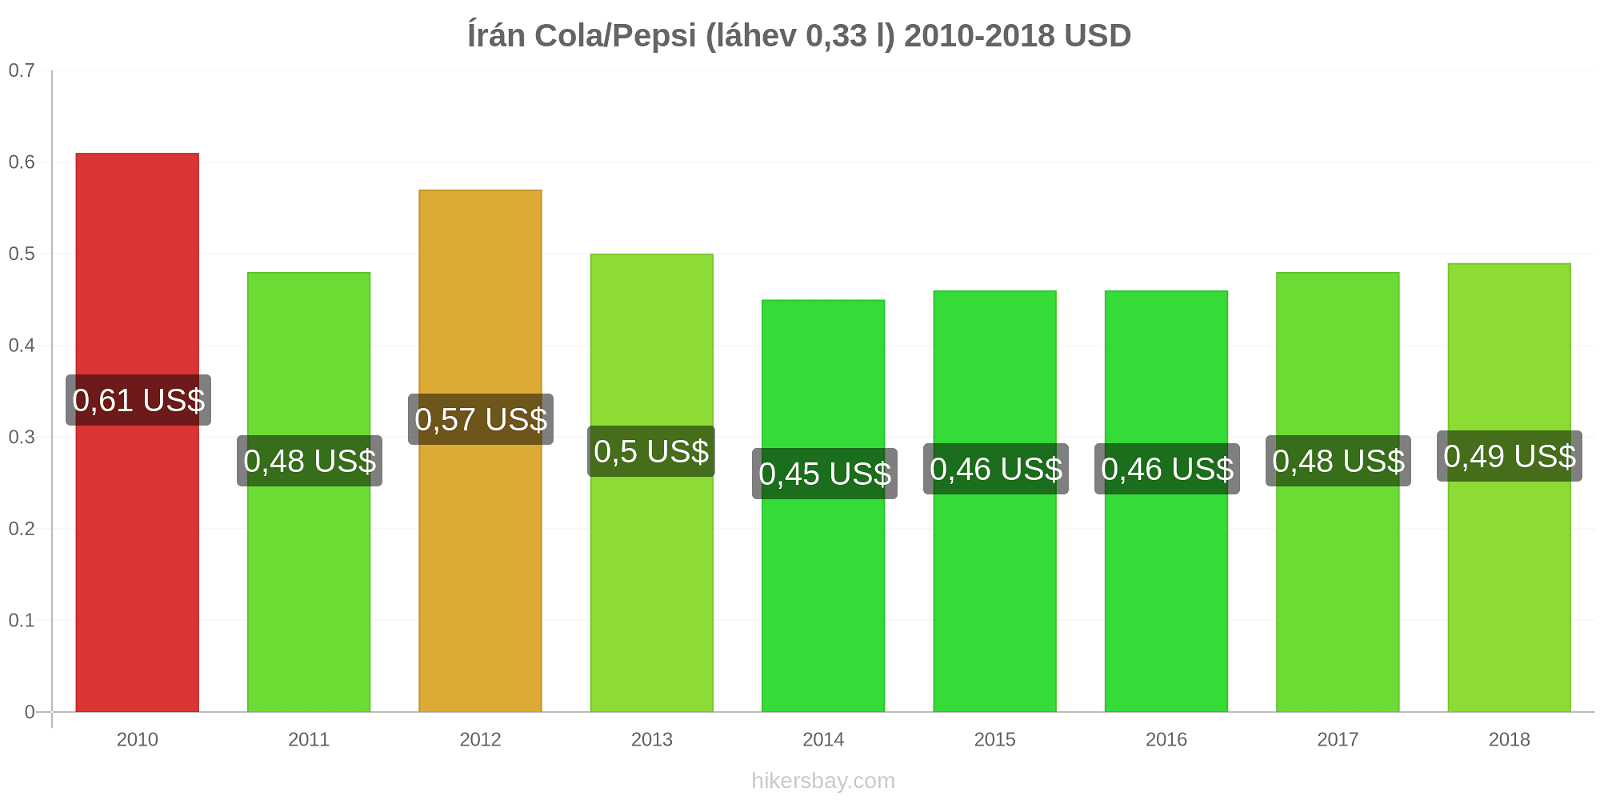 Írán změny cen Coca-Cola/Pepsi (láhev 0.33 l) hikersbay.com